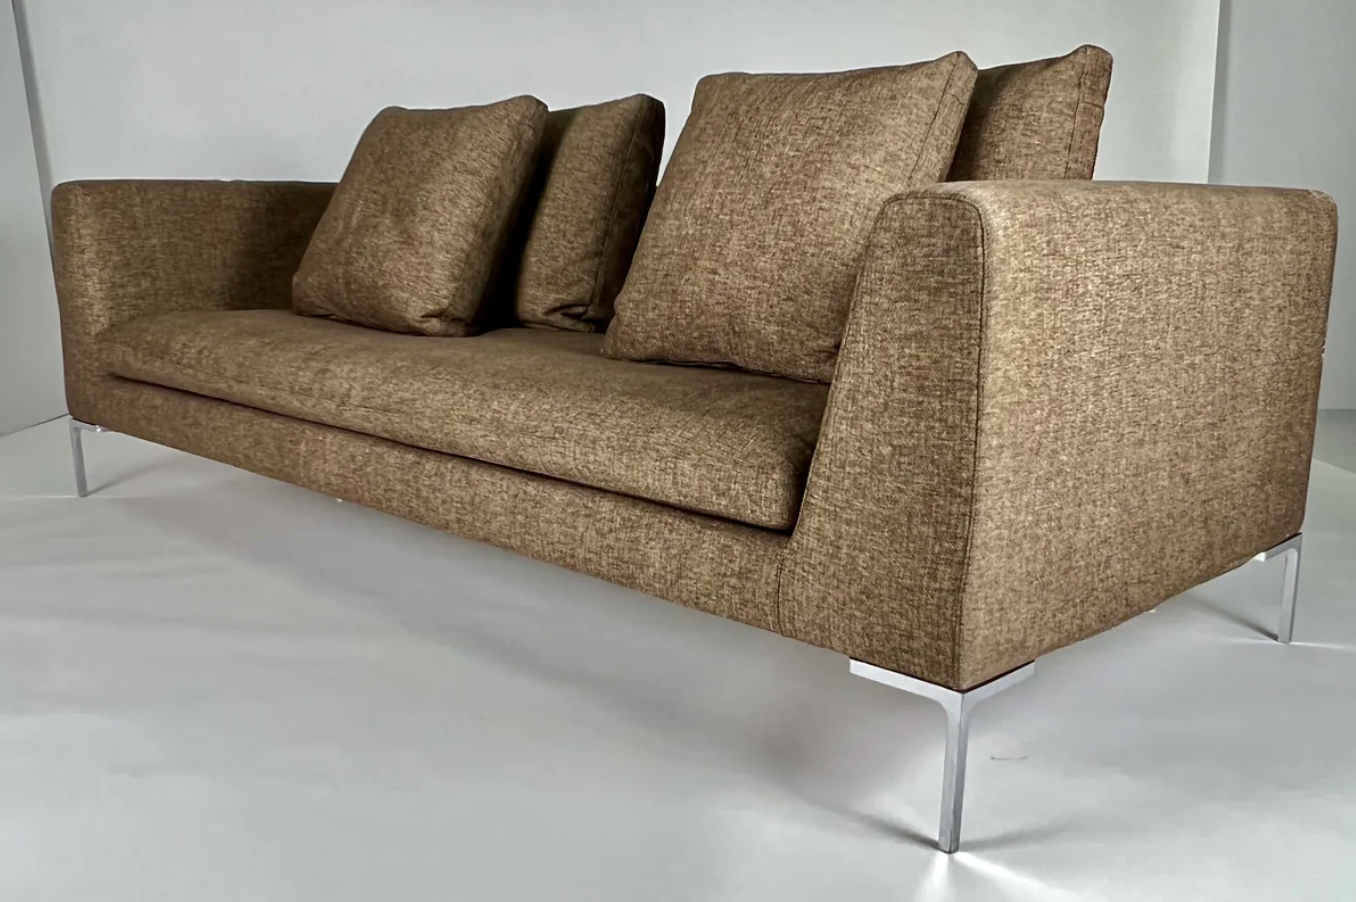 Brown tweed modern sofa,  chrome legs, like Roche Bobois